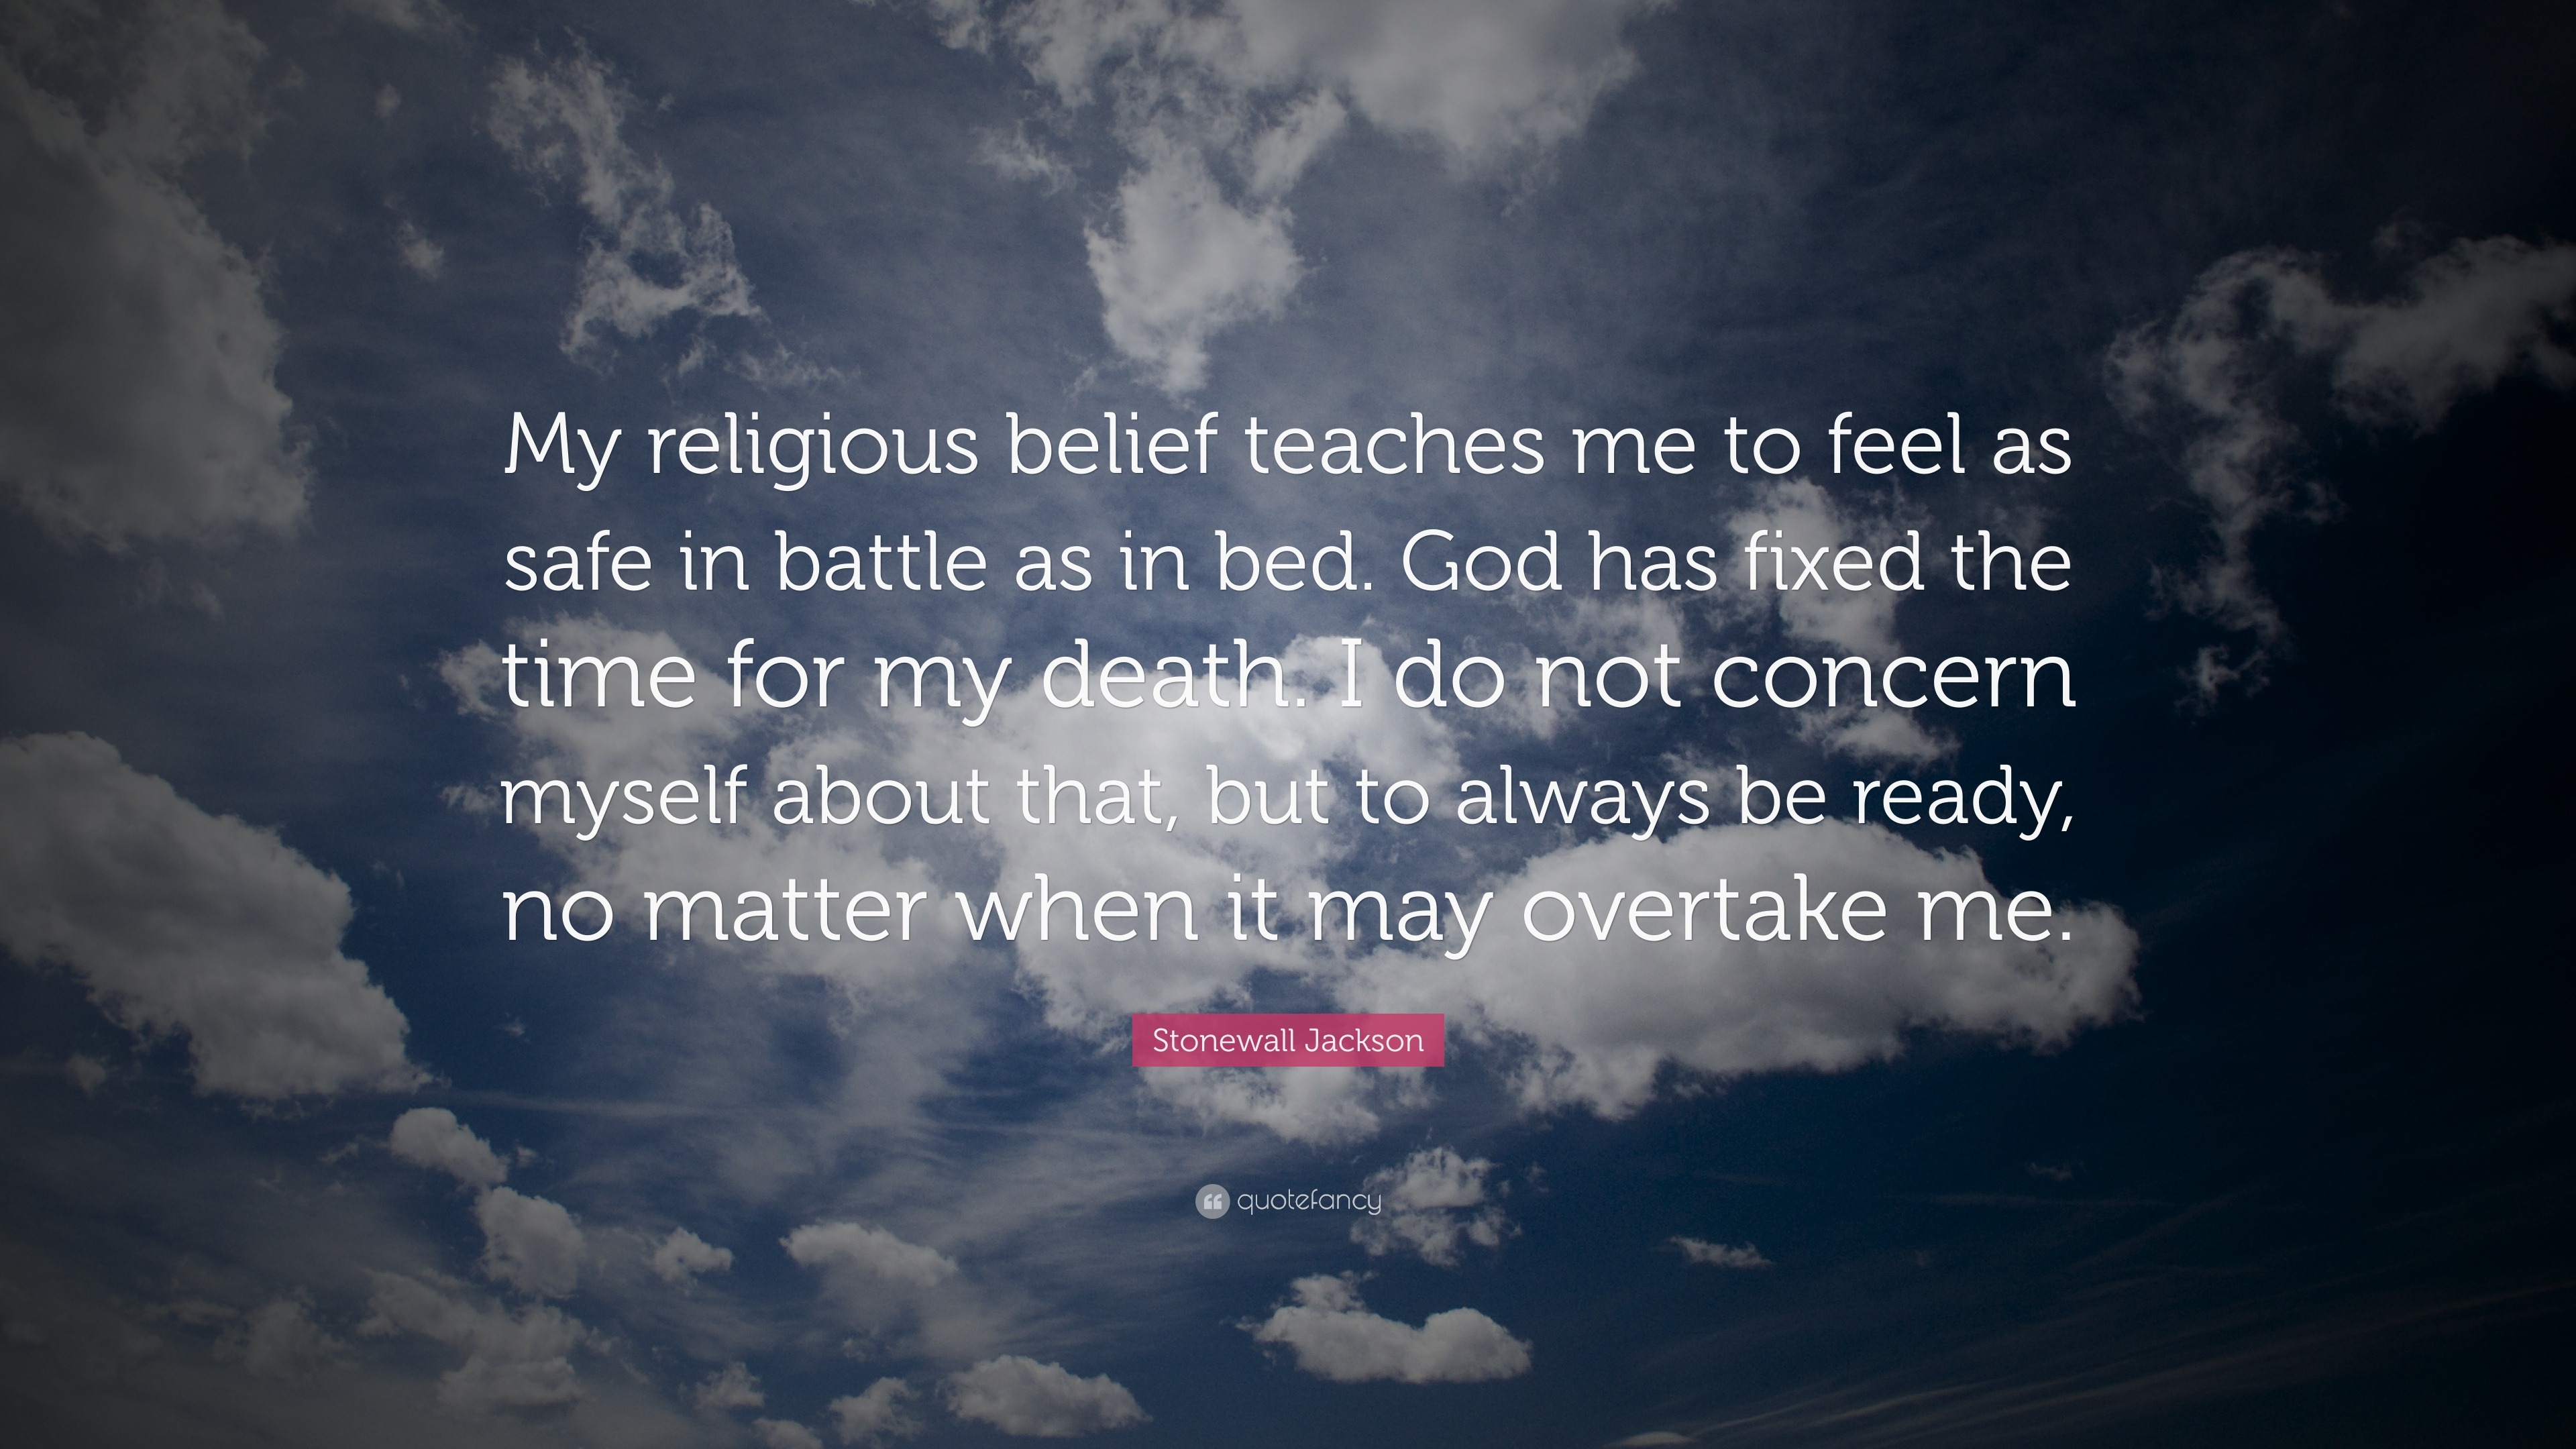 Stonewall Jackson Quote “My religious belief teaches me to feel as